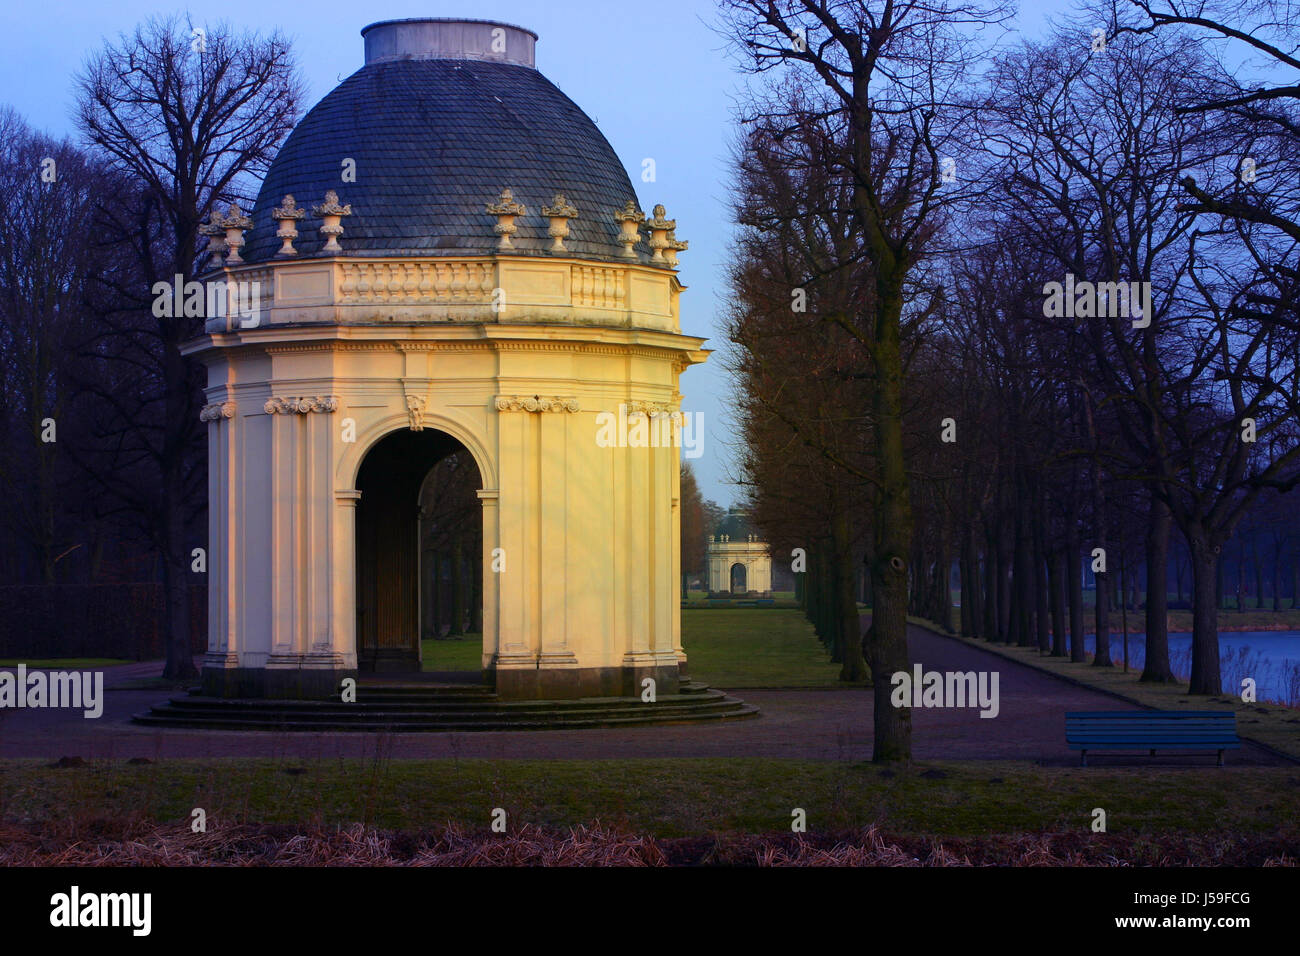 Blu parco storico giardino inverno freddo verde tramonto barocco sera raggi solari Foto Stock